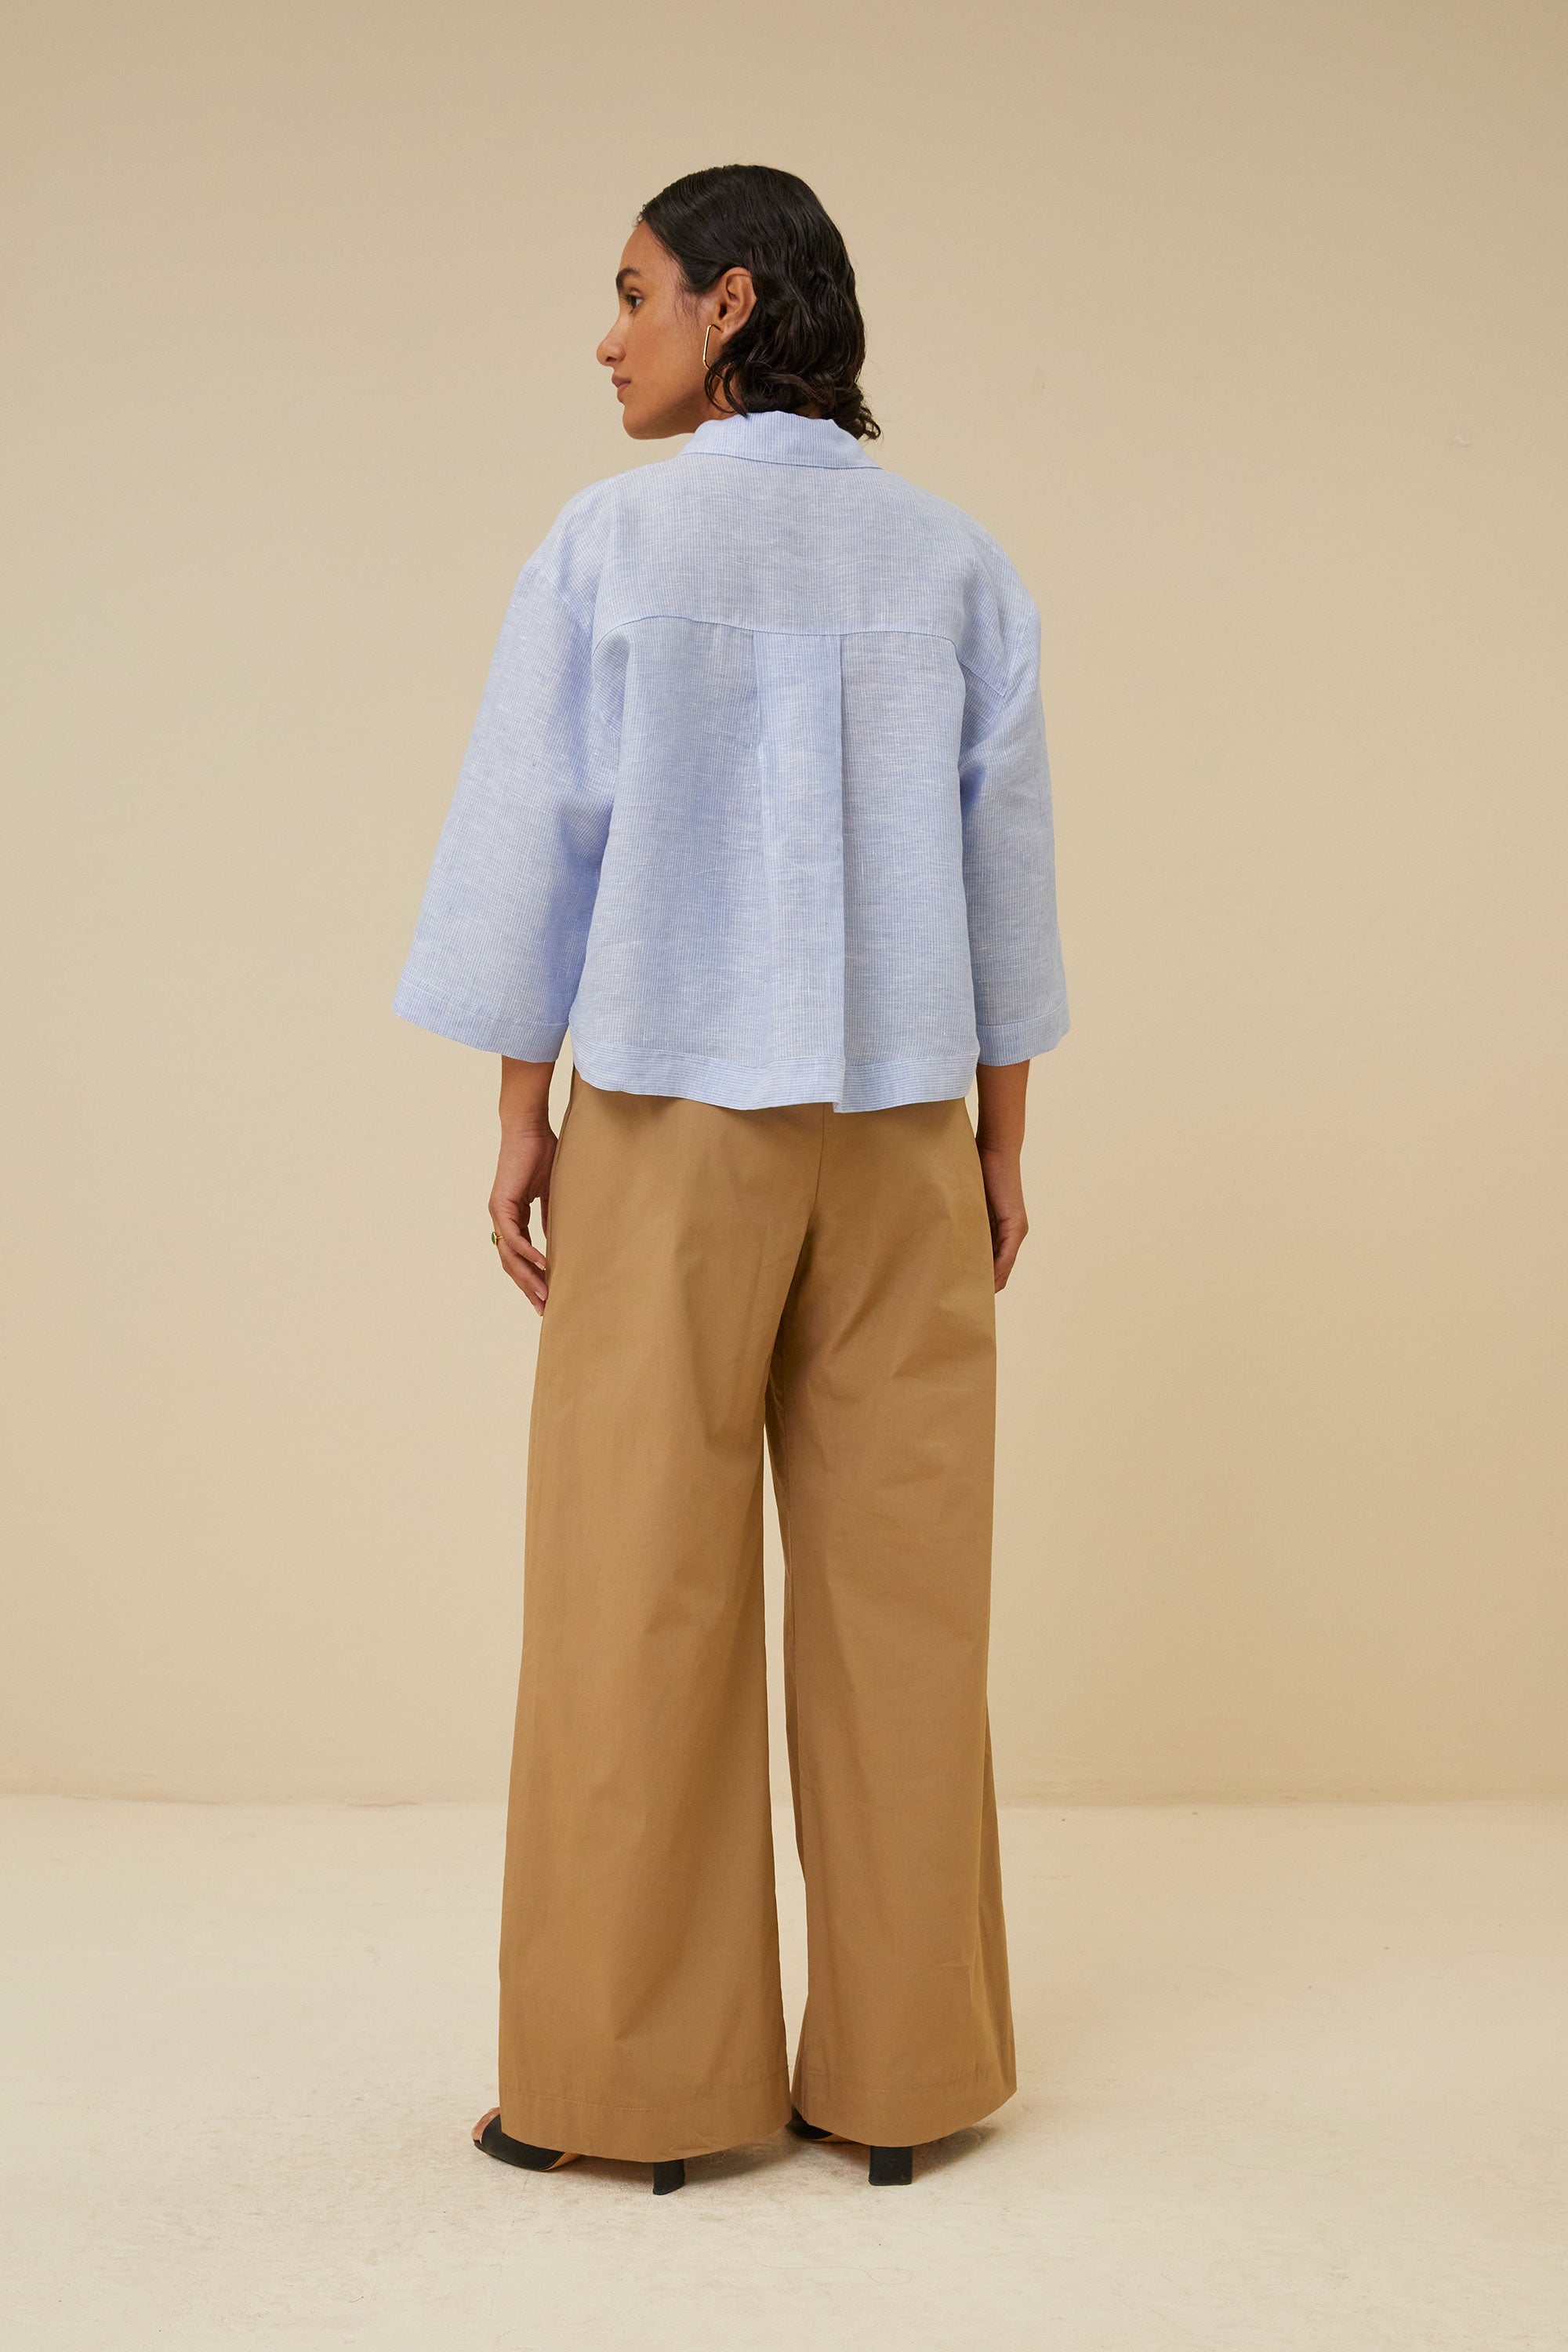 benice pinstripe blouse | sky blue